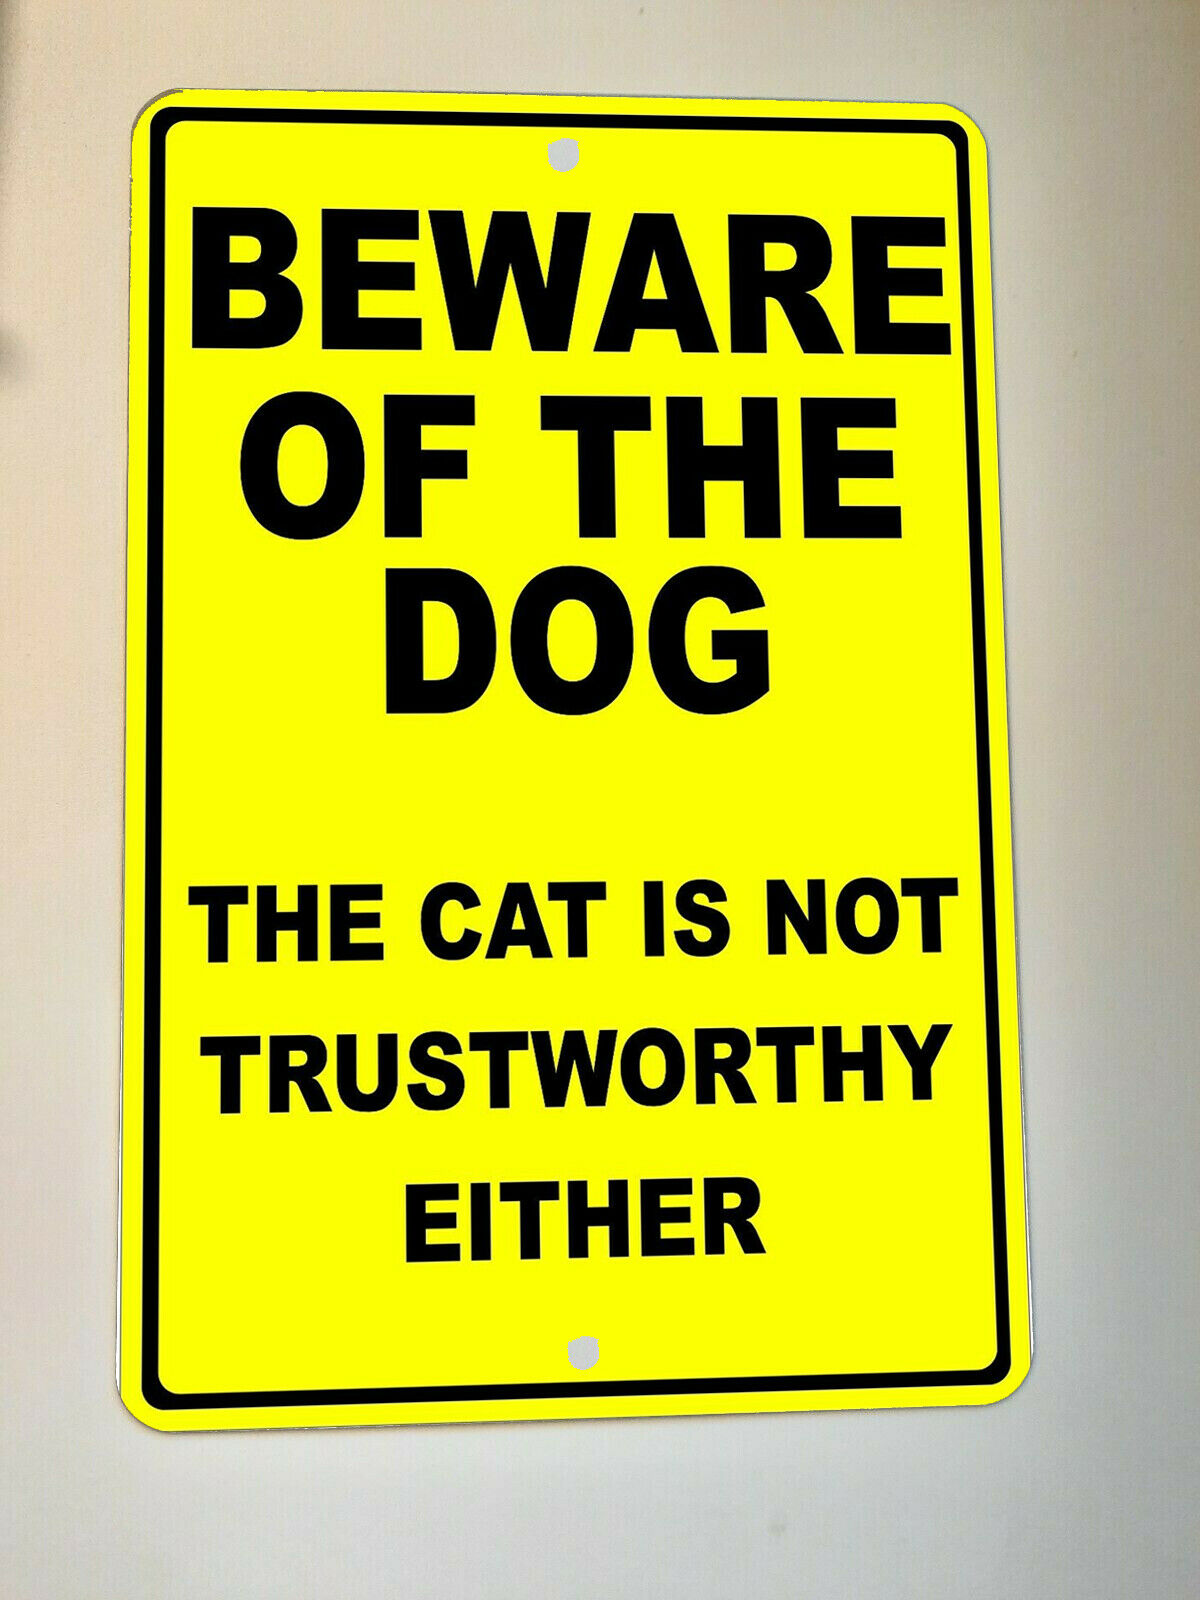 BEWARE OF THE DOG The Cat Isn't Trustworthy 8x12 Metal Wall Warning Sign